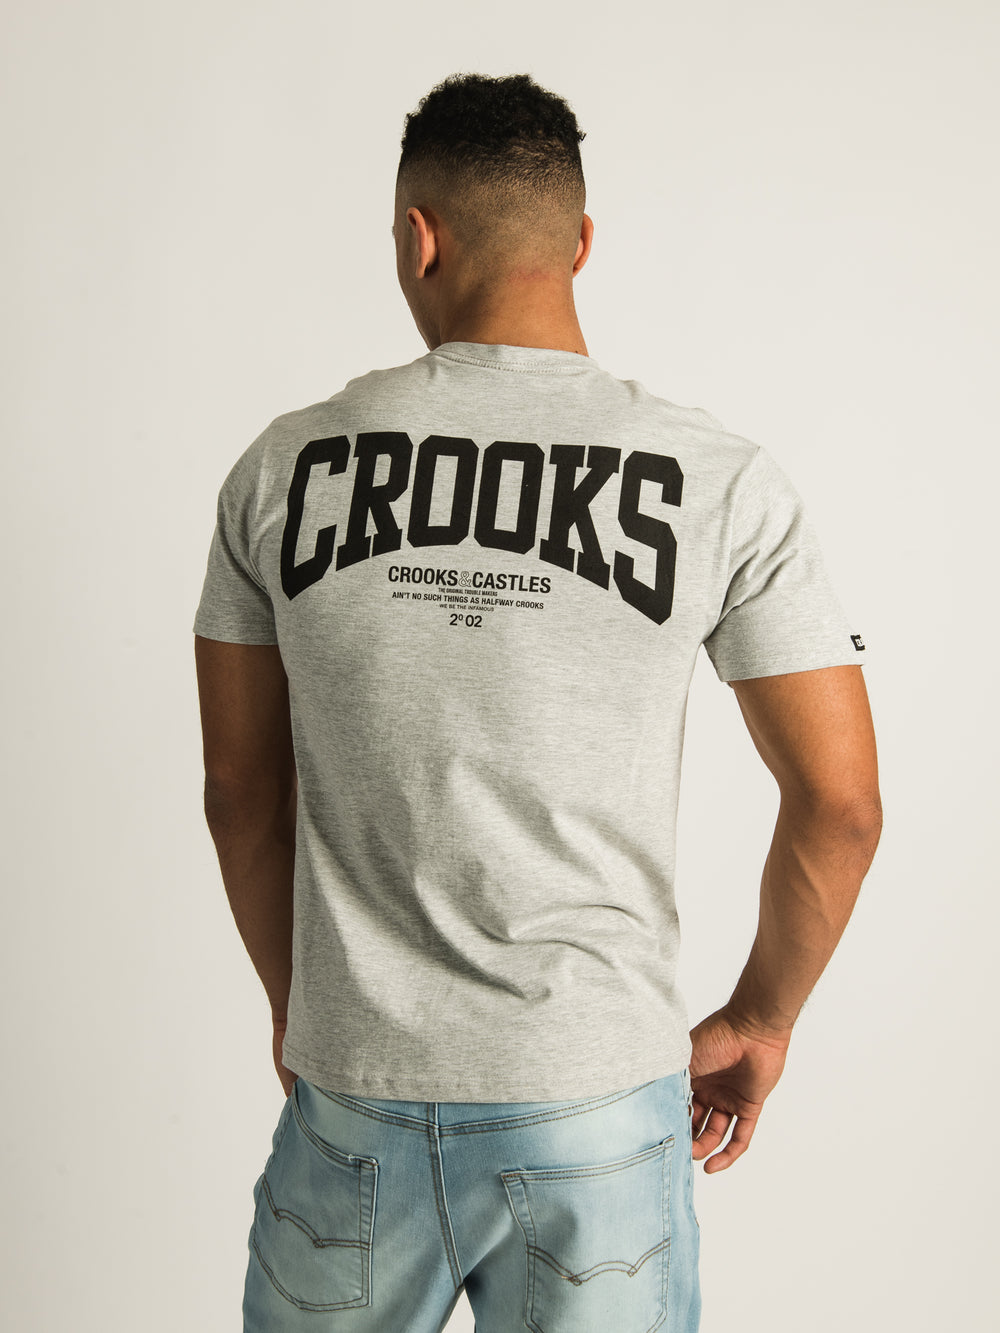 CROOKS & CASTLES CORE CROOKS T-SHIRT